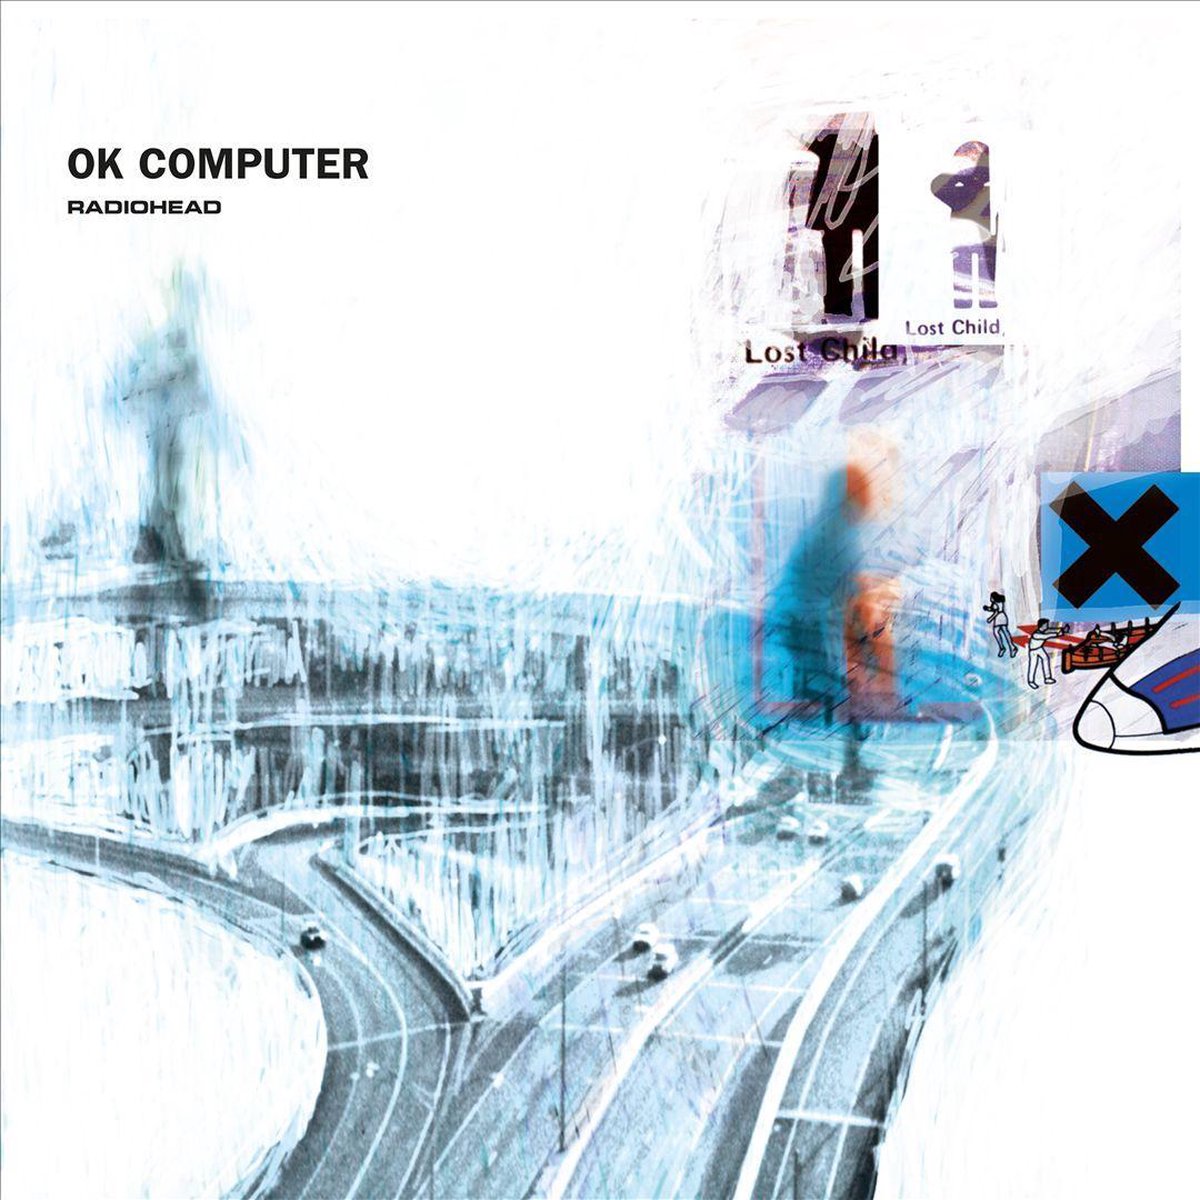 Radiohead: Ok Computer [CD] - Radiohead